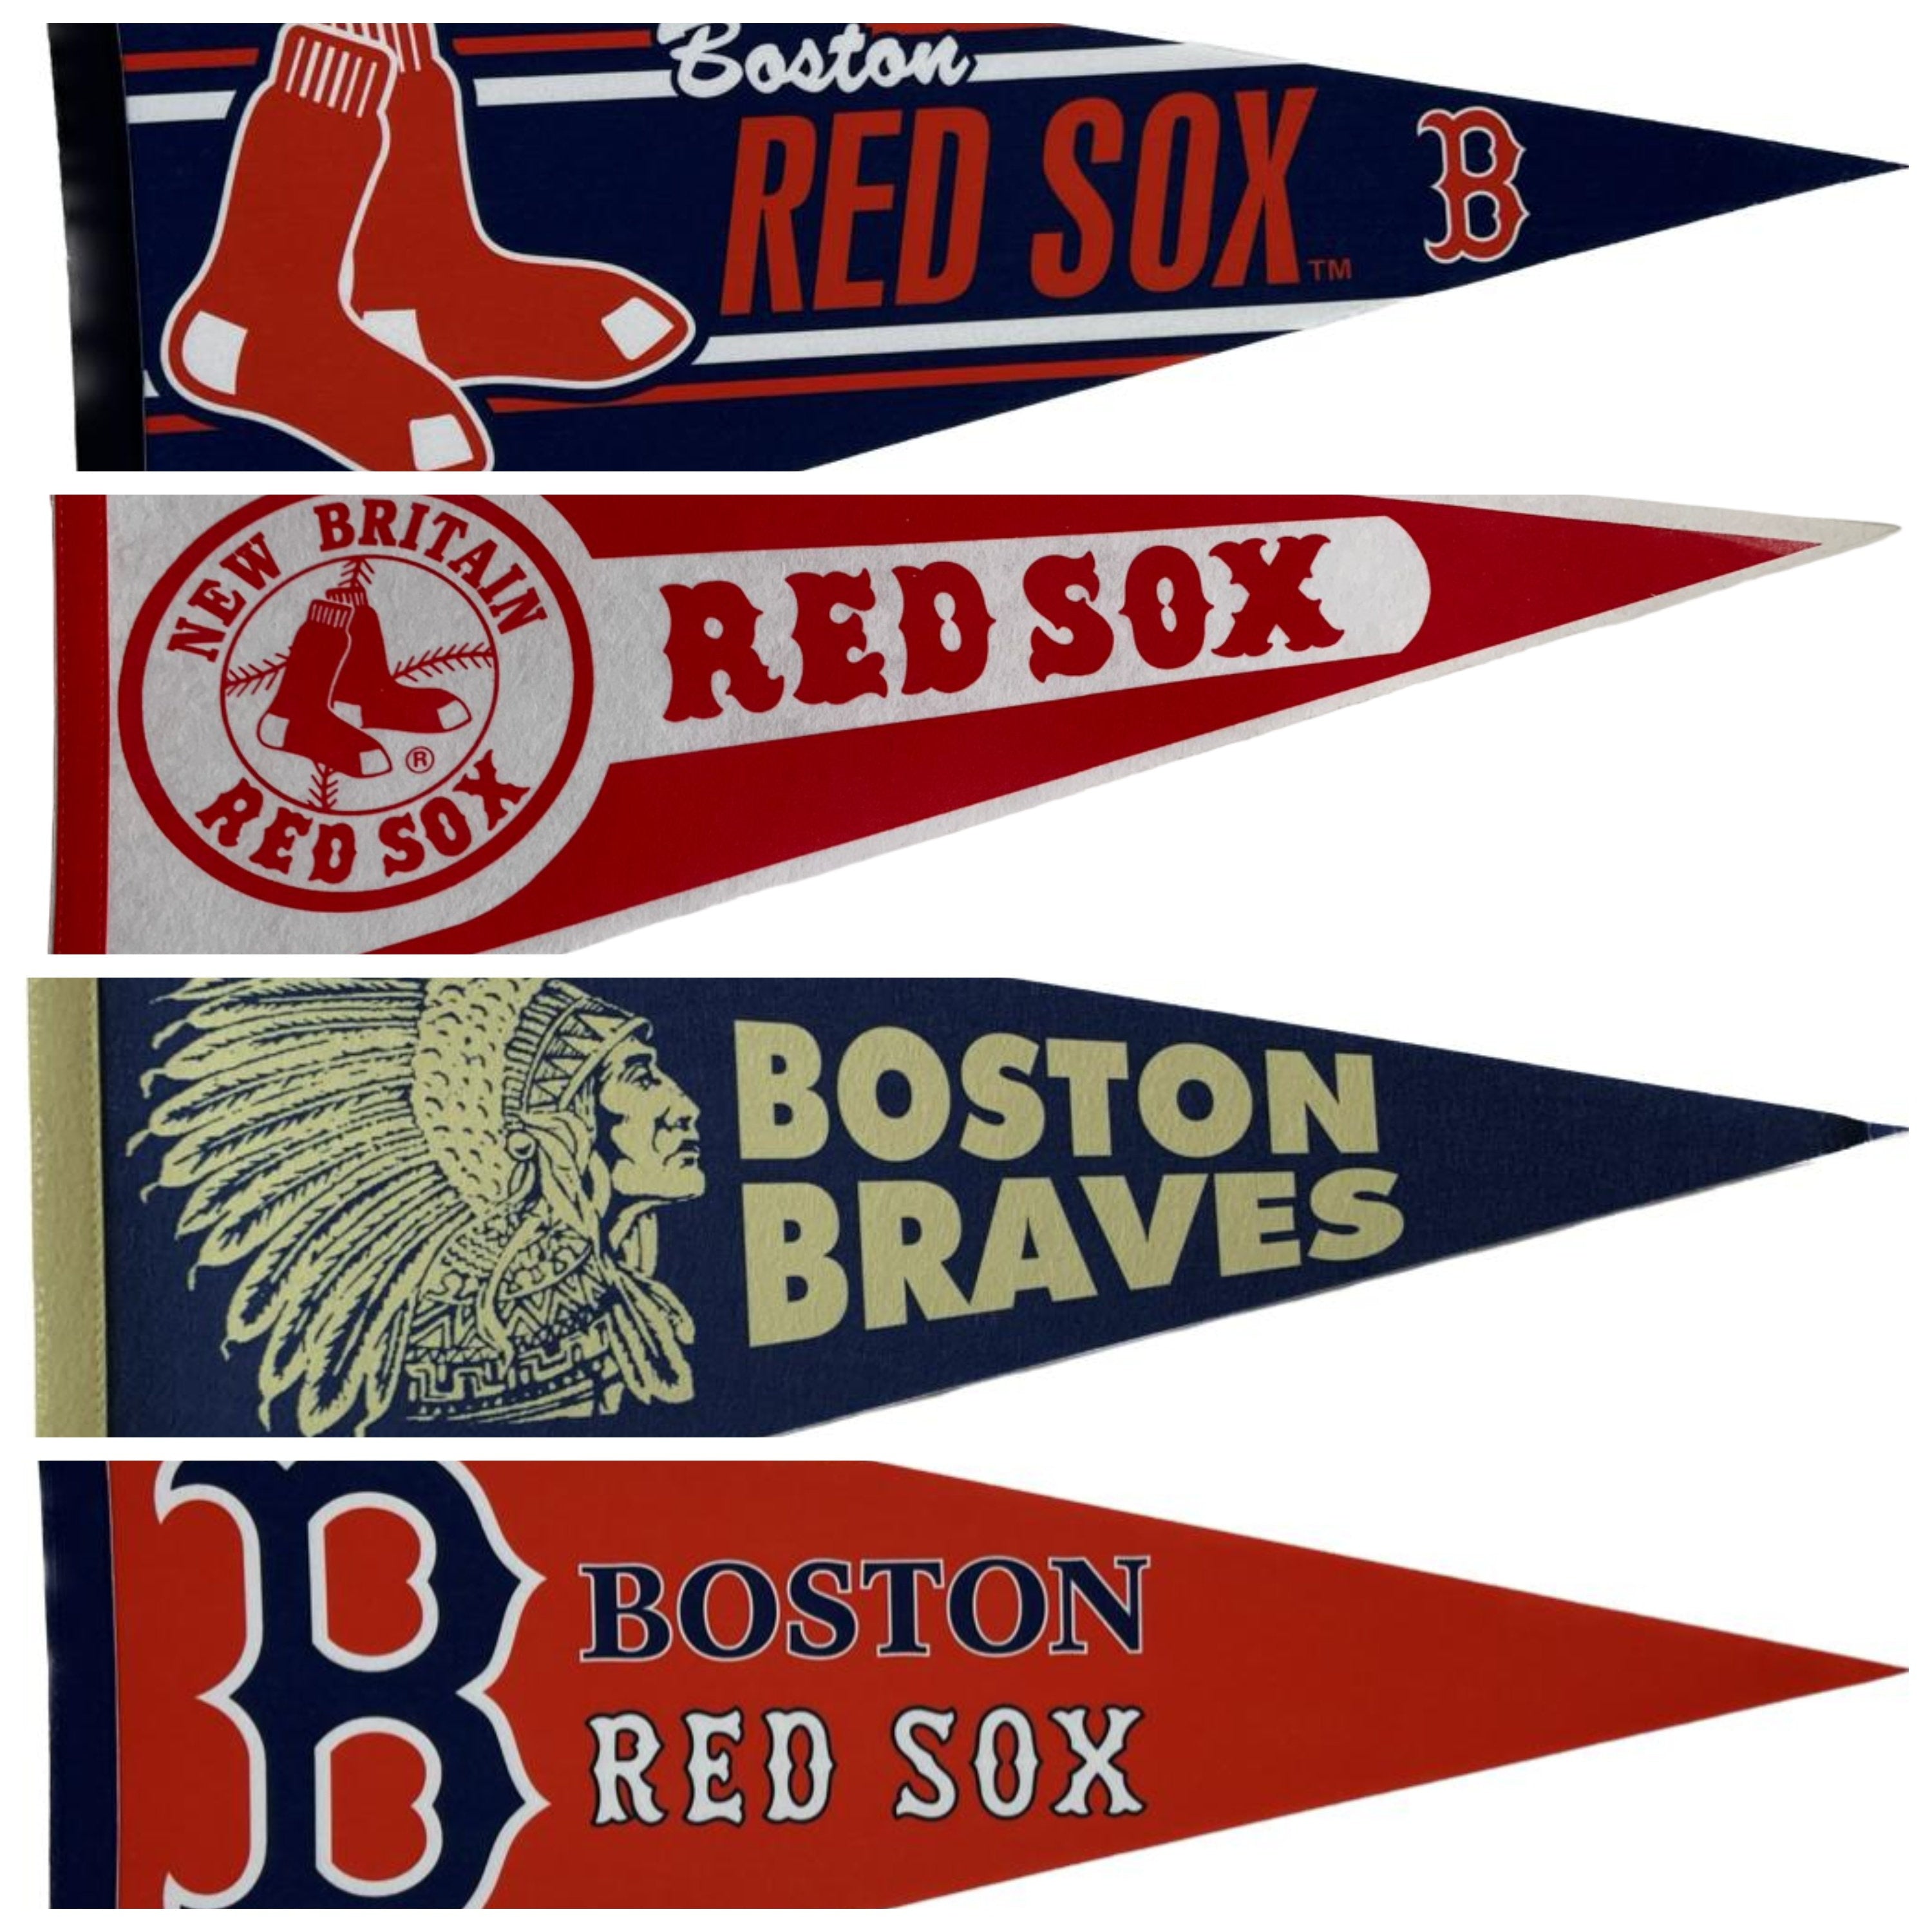 New Britain Red Sox MLB vintage 90s old logo mlb pennants vaantje baseball  fanion pennant flag vintage classic red sox 90s minor league - Blue